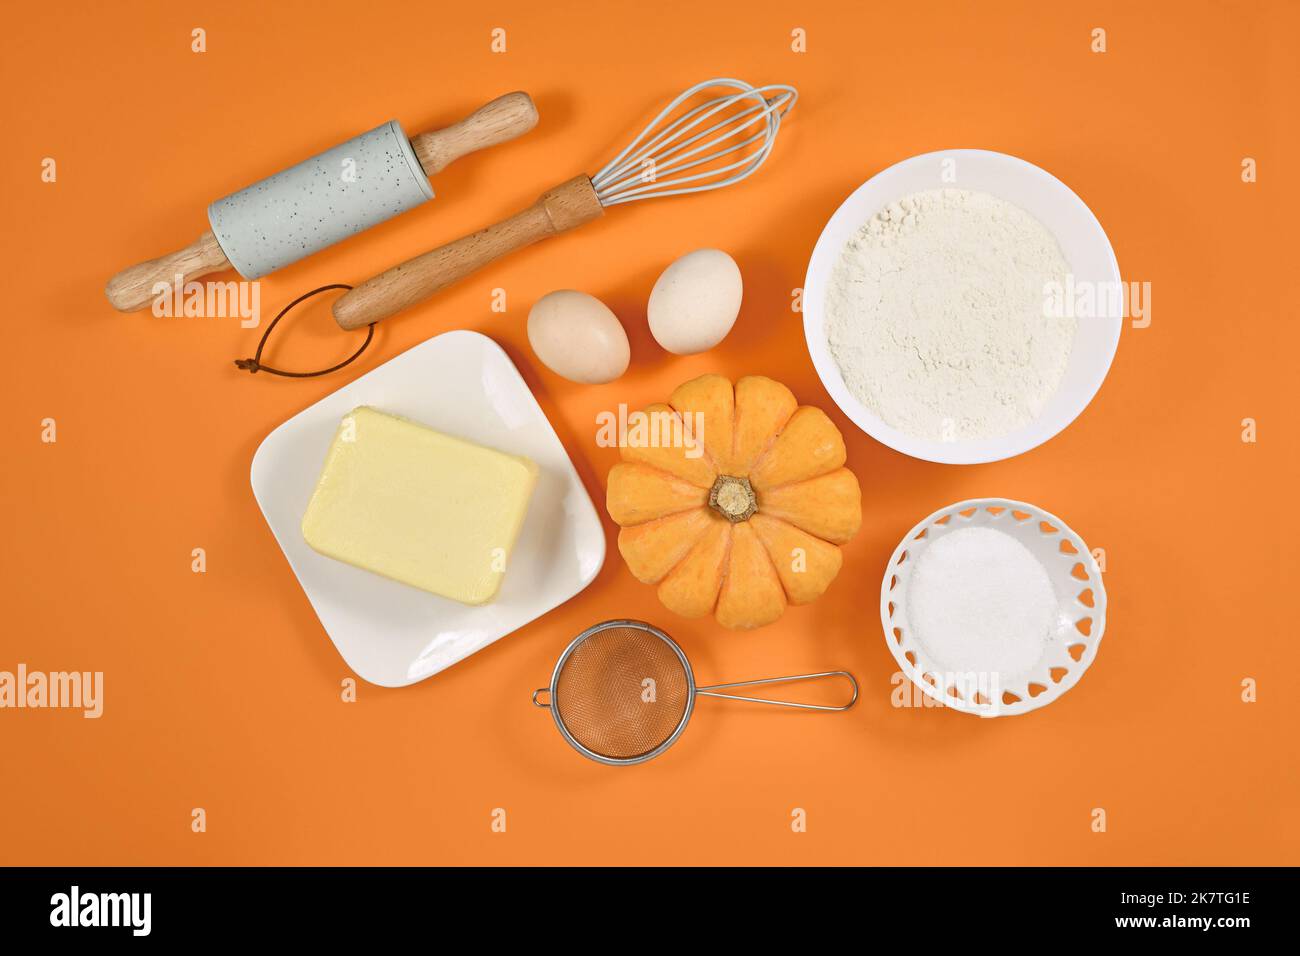 Pumpkin pie ingredients and baking tools on orange background Stock Photo